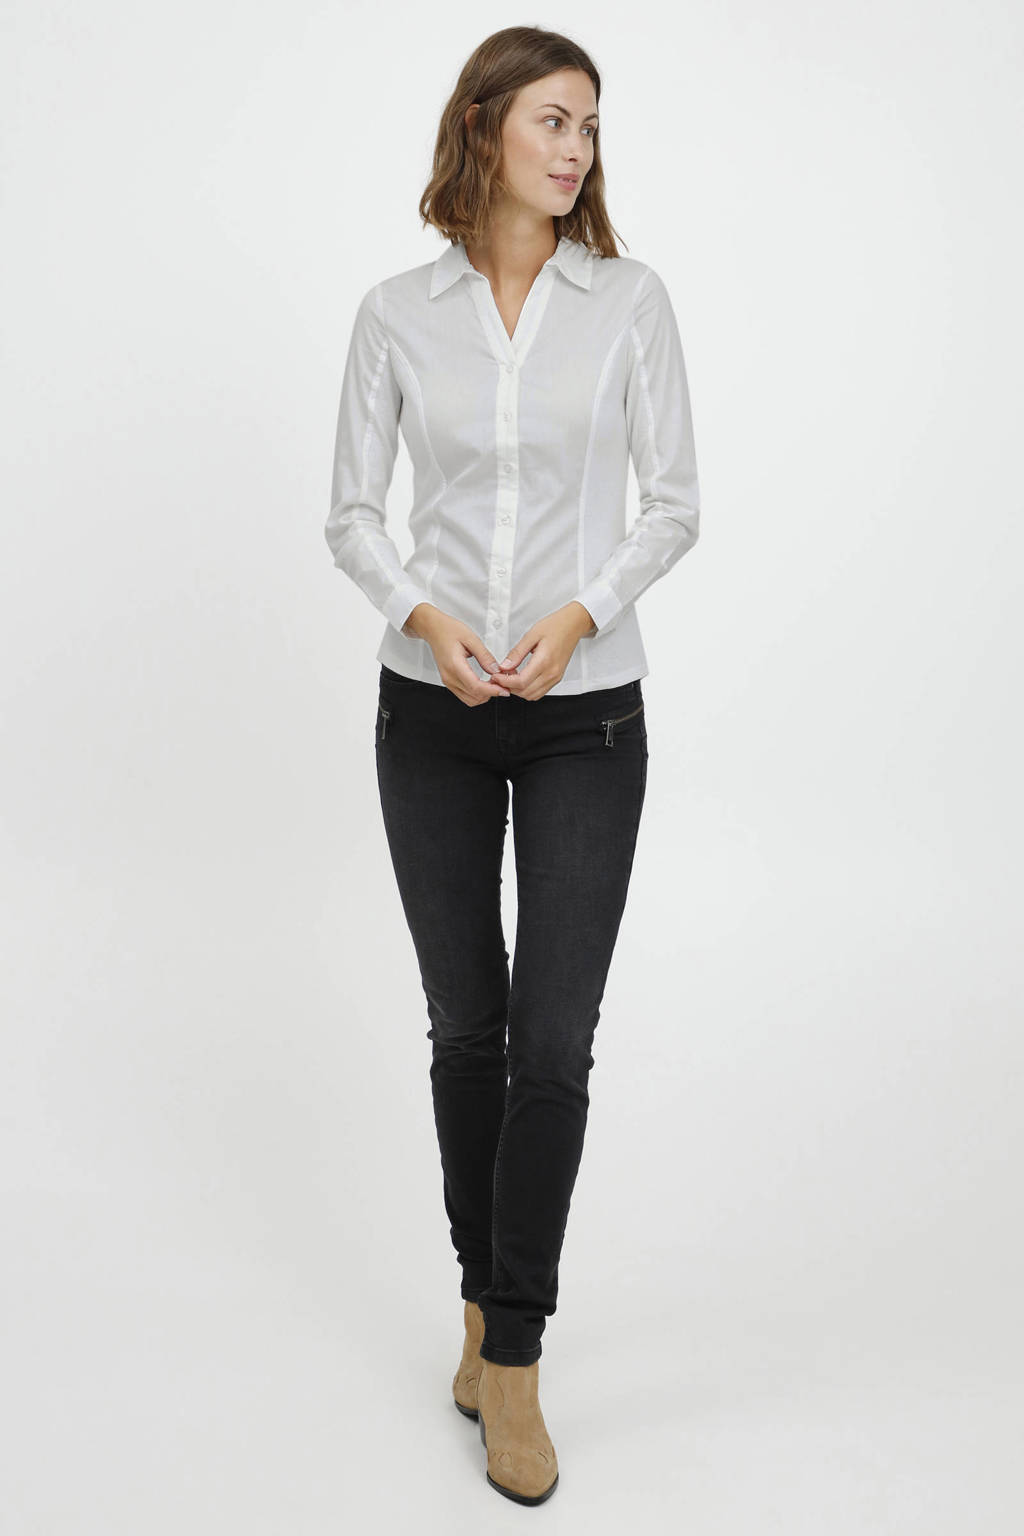 Witte dames Fransa blouse van katoen met lange mouwen, V-hals en knoopsluiting